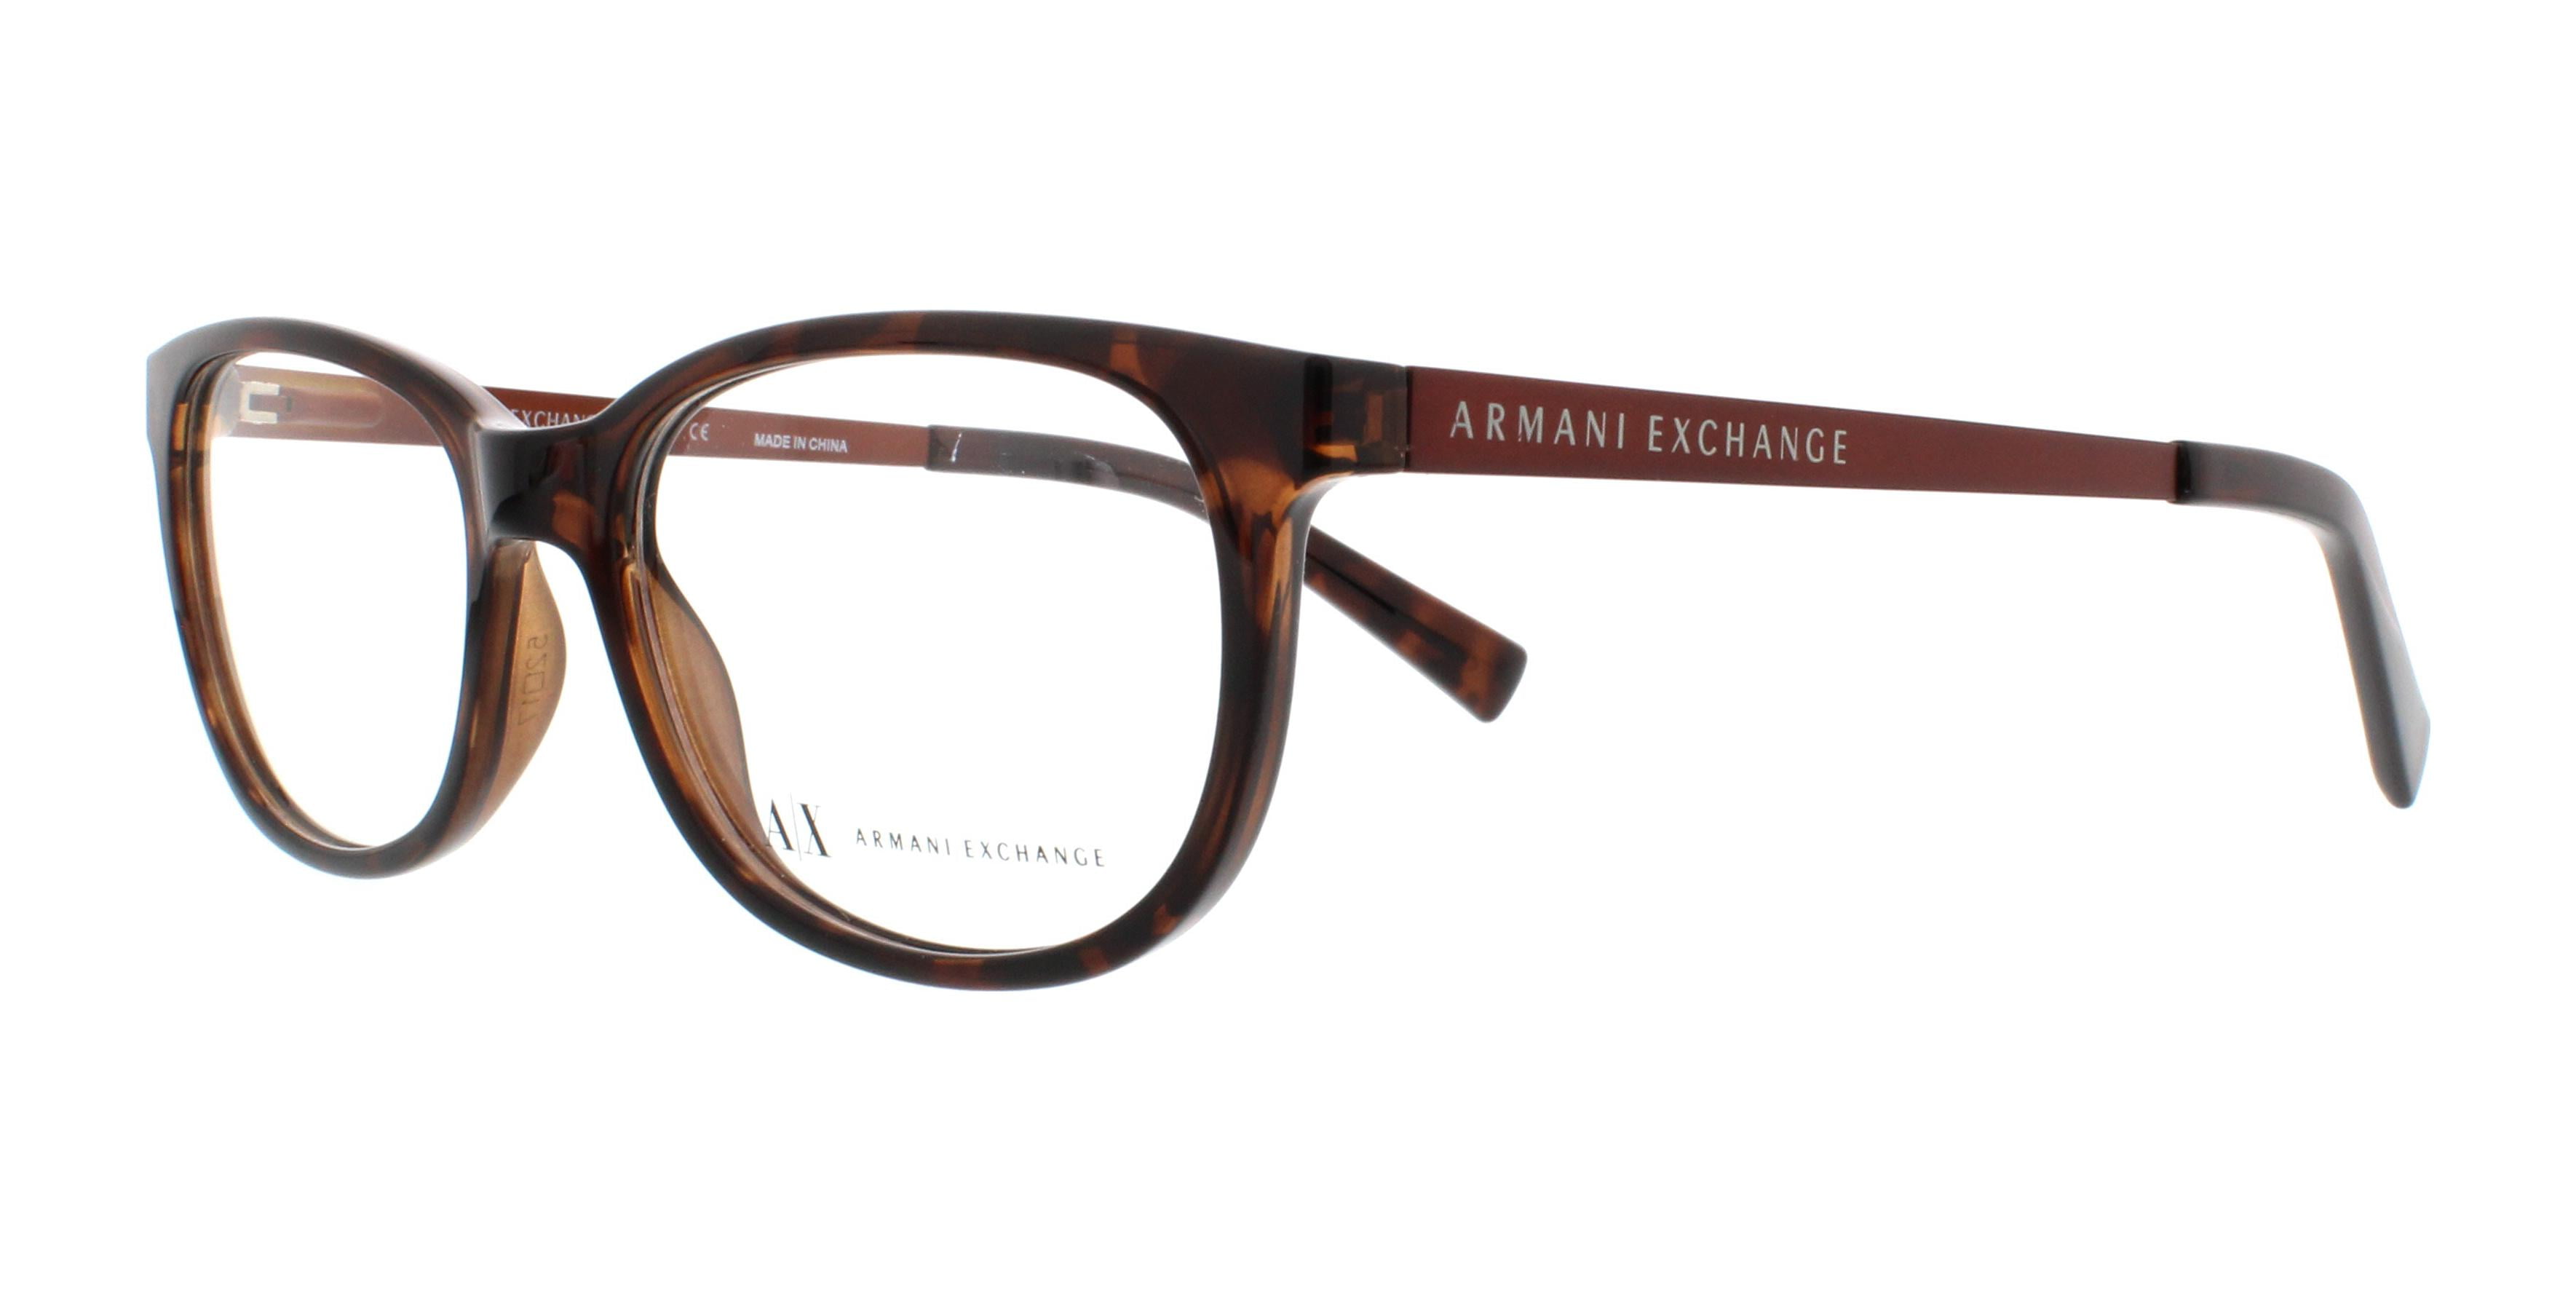 armani exchange glasses frame